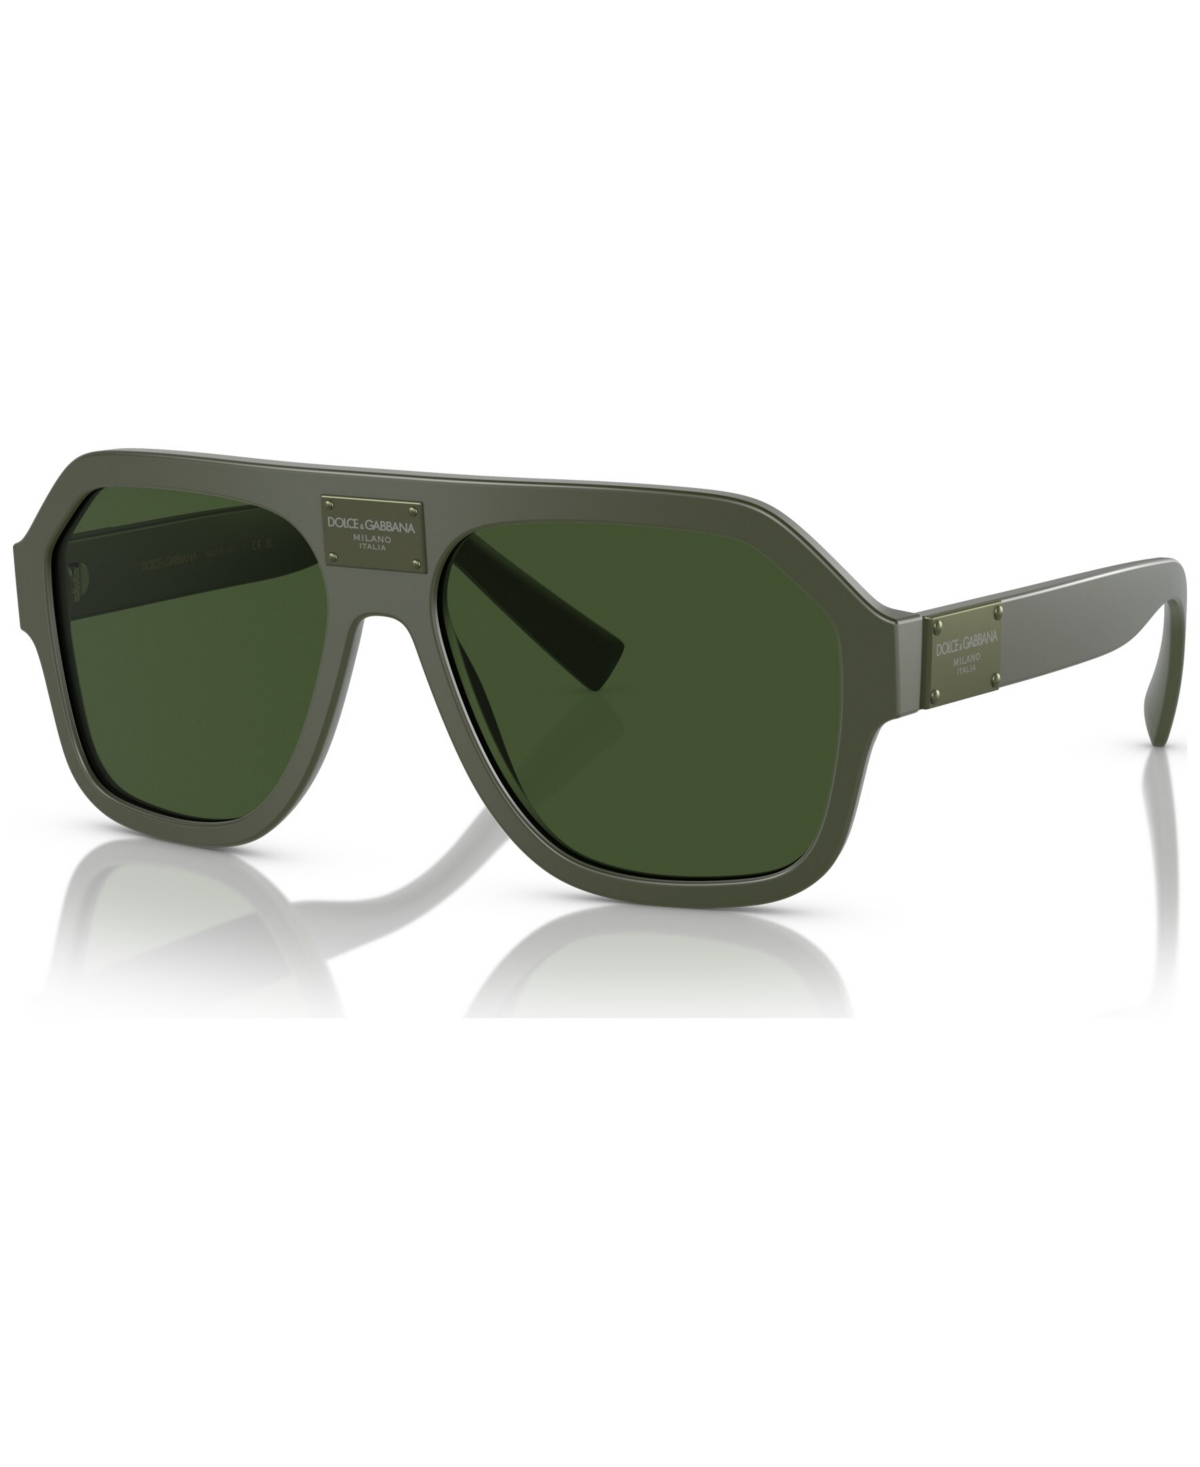 Dolce & Gabbana Men's Low Bridge Fit Sunglasses, Dg4433f In Matte Dark Green